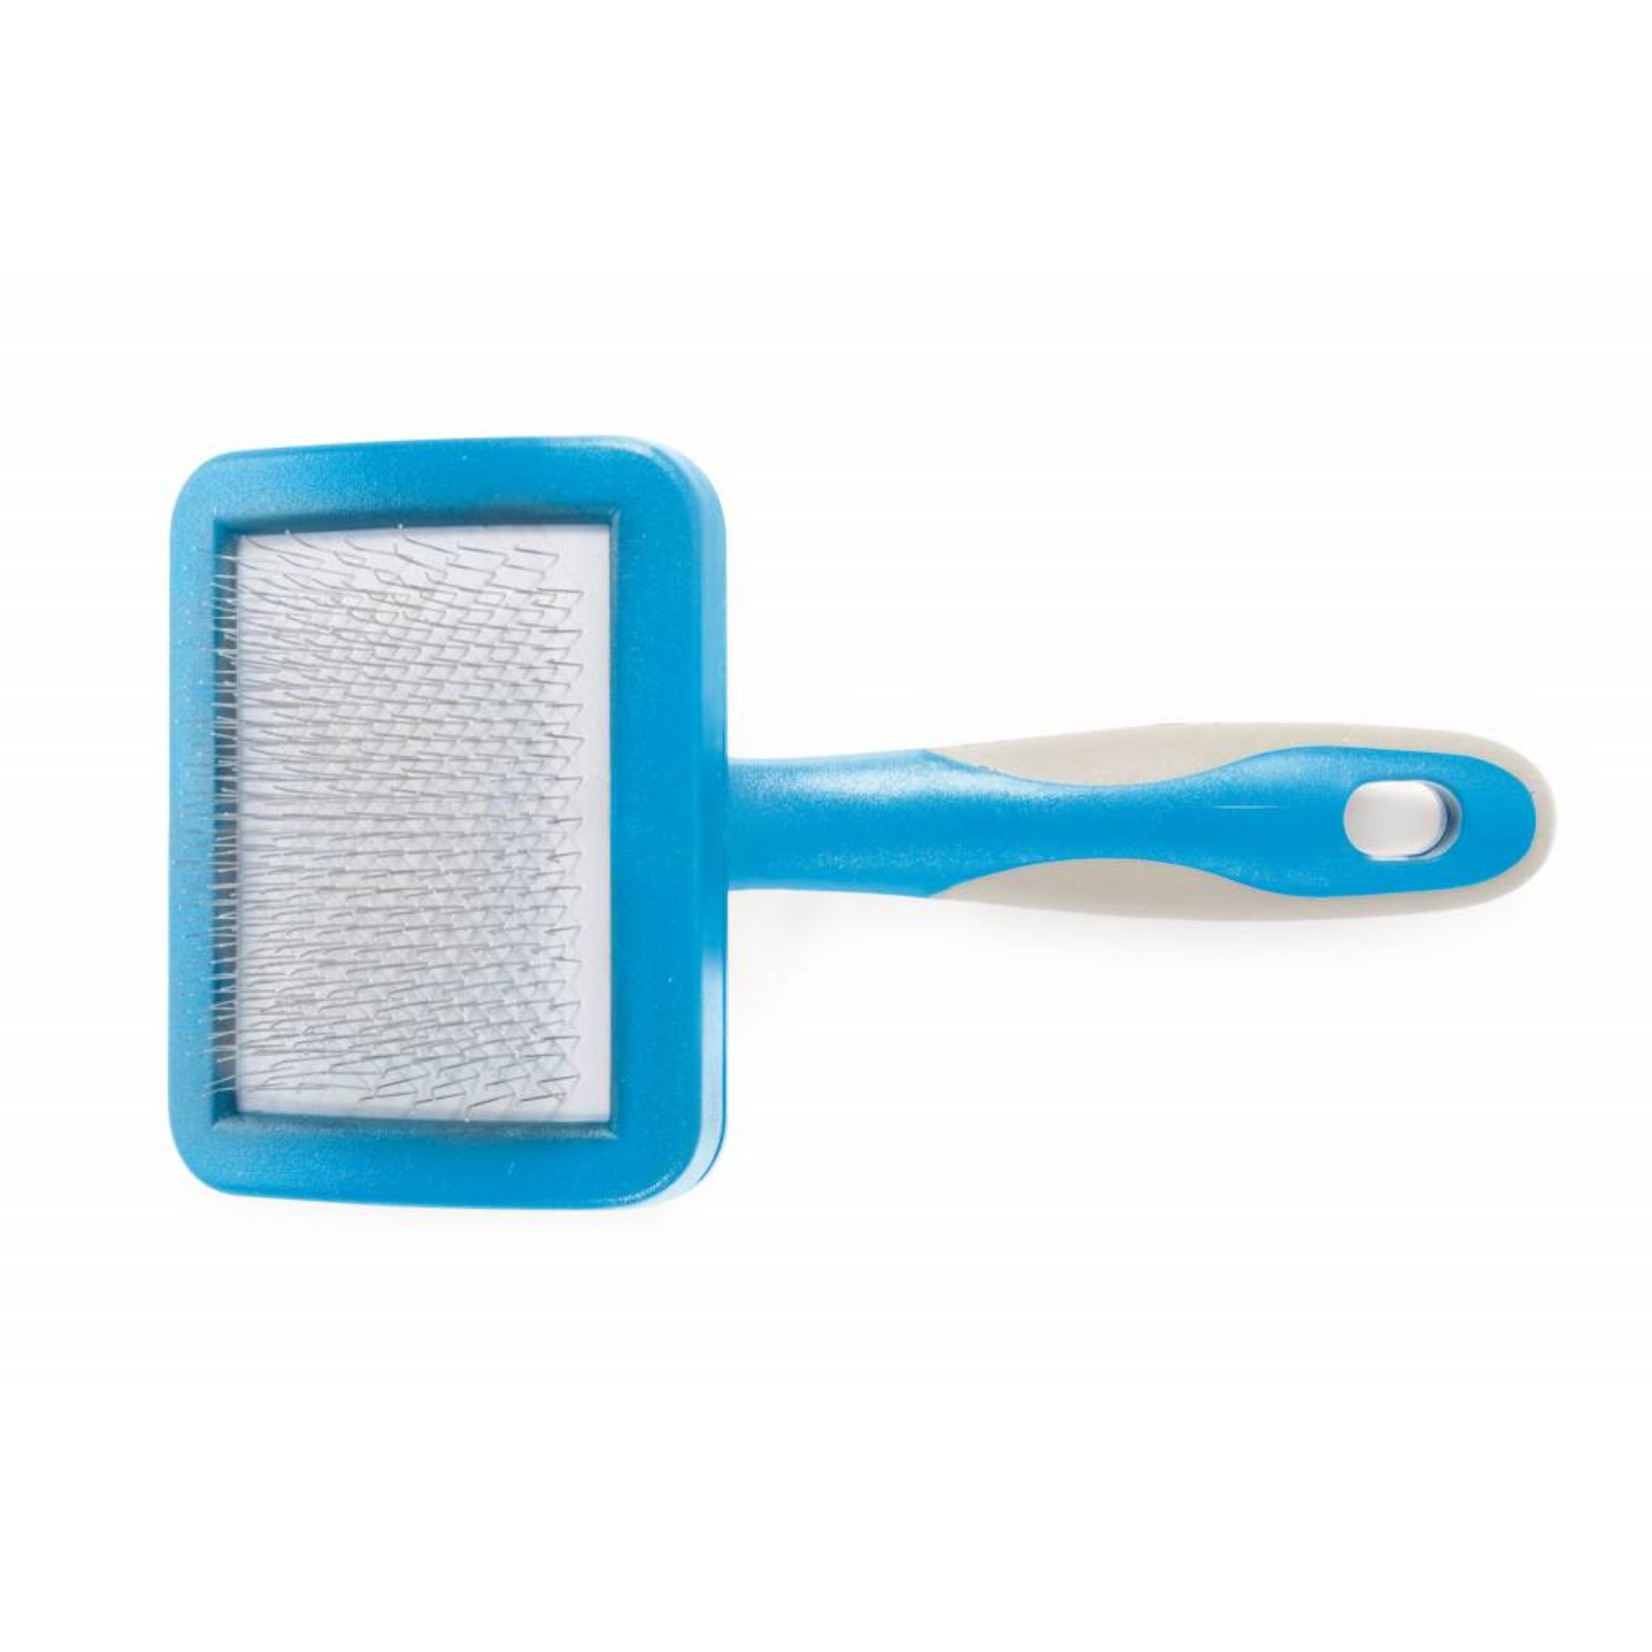 Ancol Ergo Dog Brush Universal Slicker, Medium